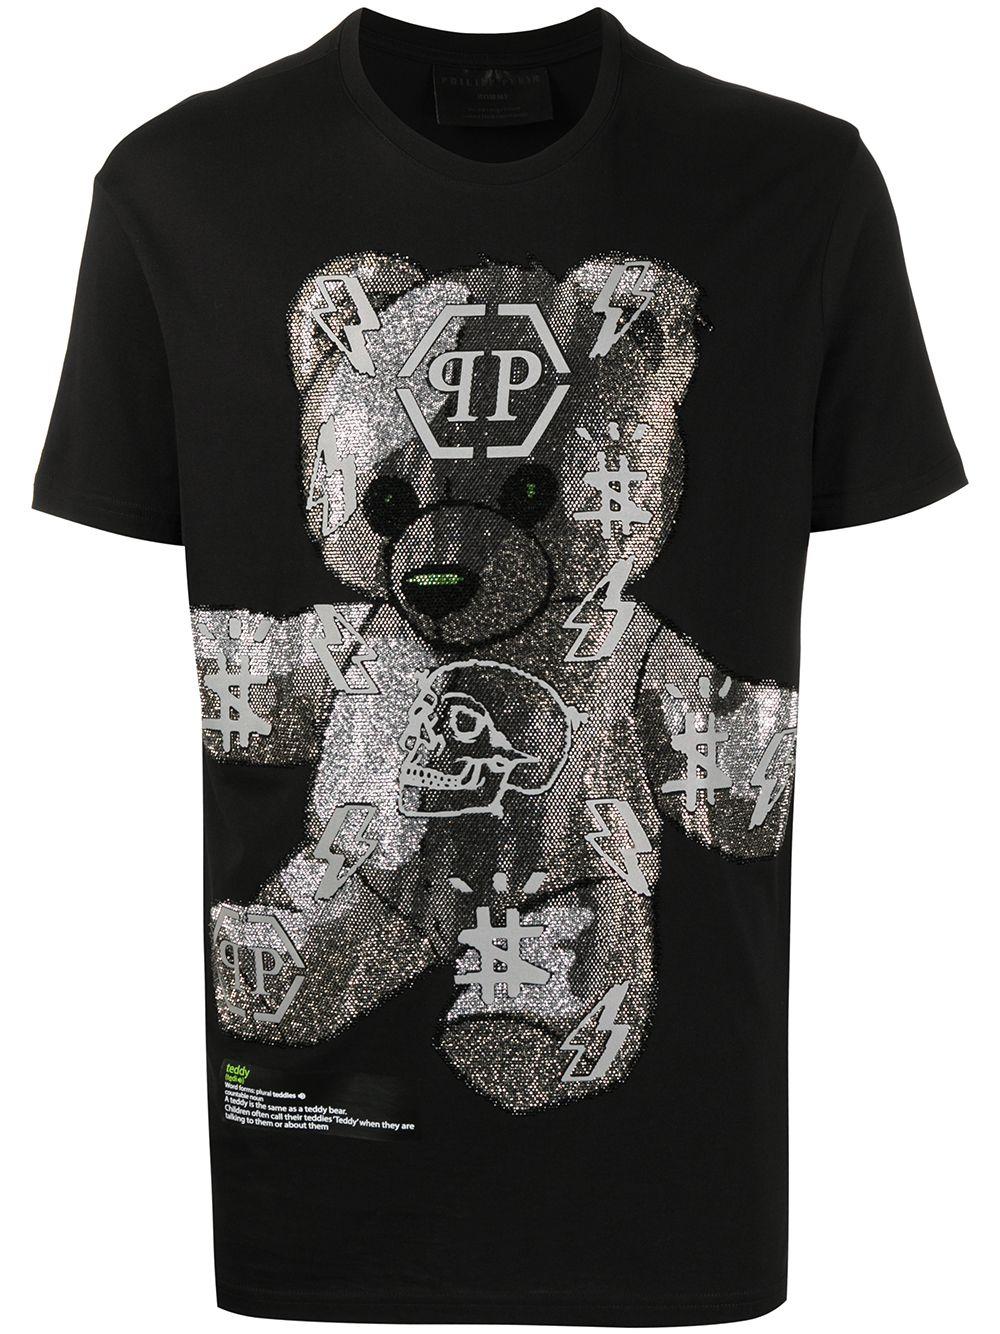 Philipp Plein Cotton Teddy Bear T-shirt in Black for Men - Lyst